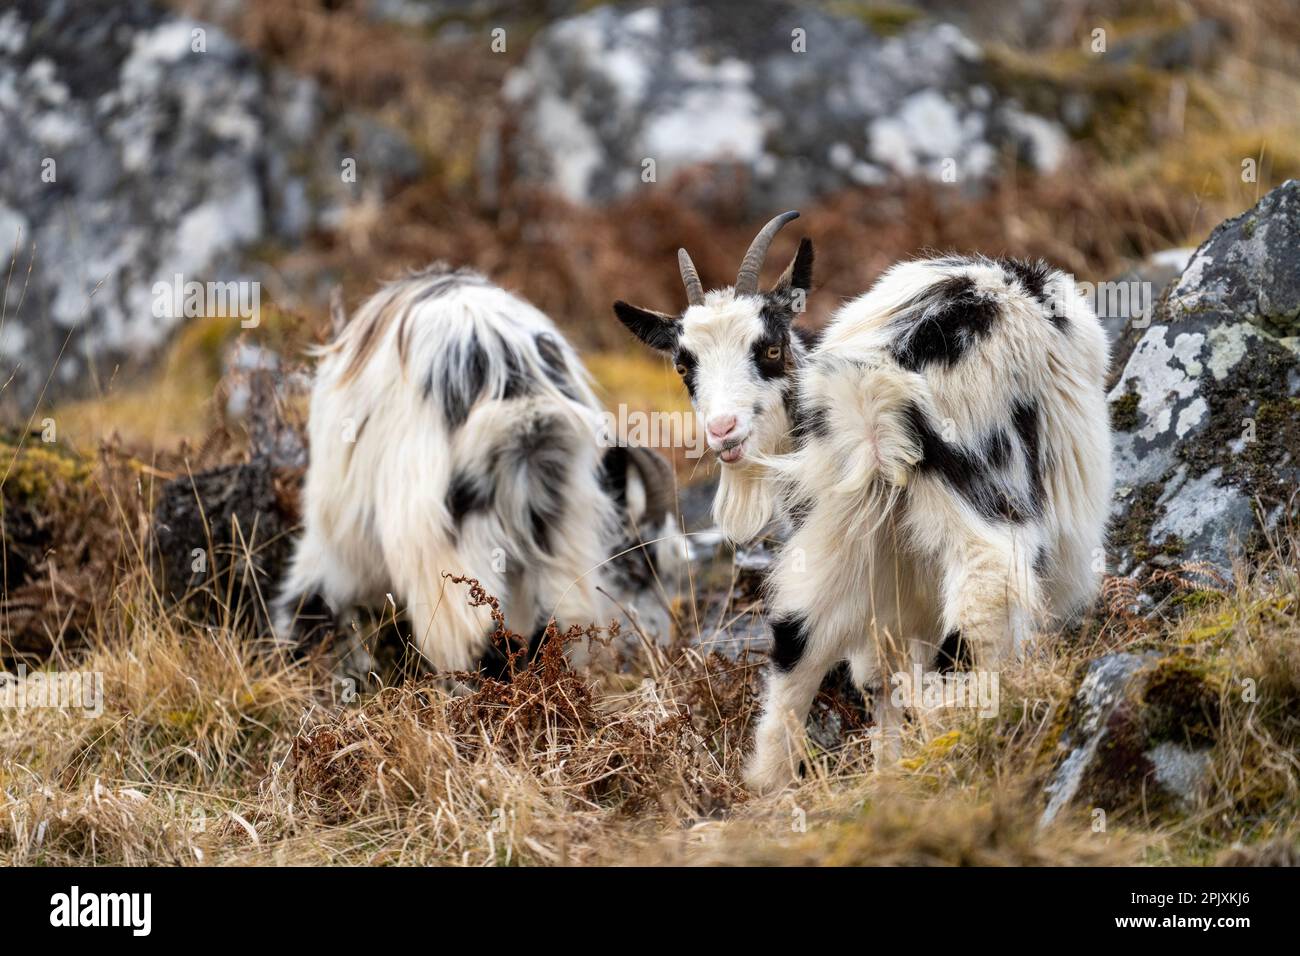 British Wild Goats in typical rough habitat Stock Photo